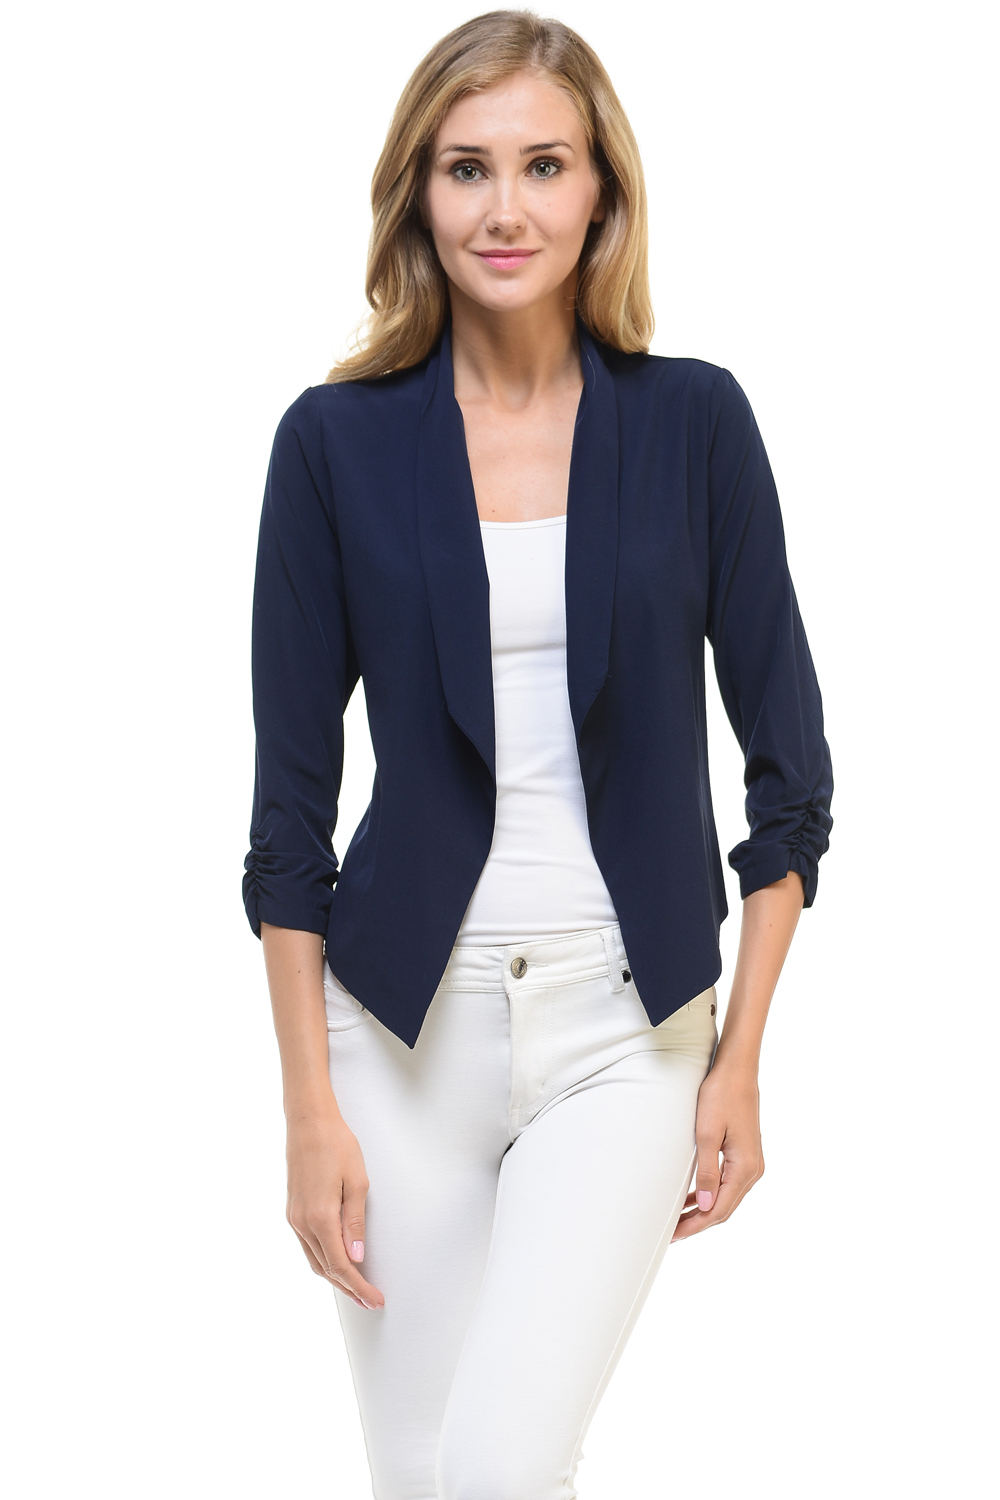 City lightweight casual blazers for women sale